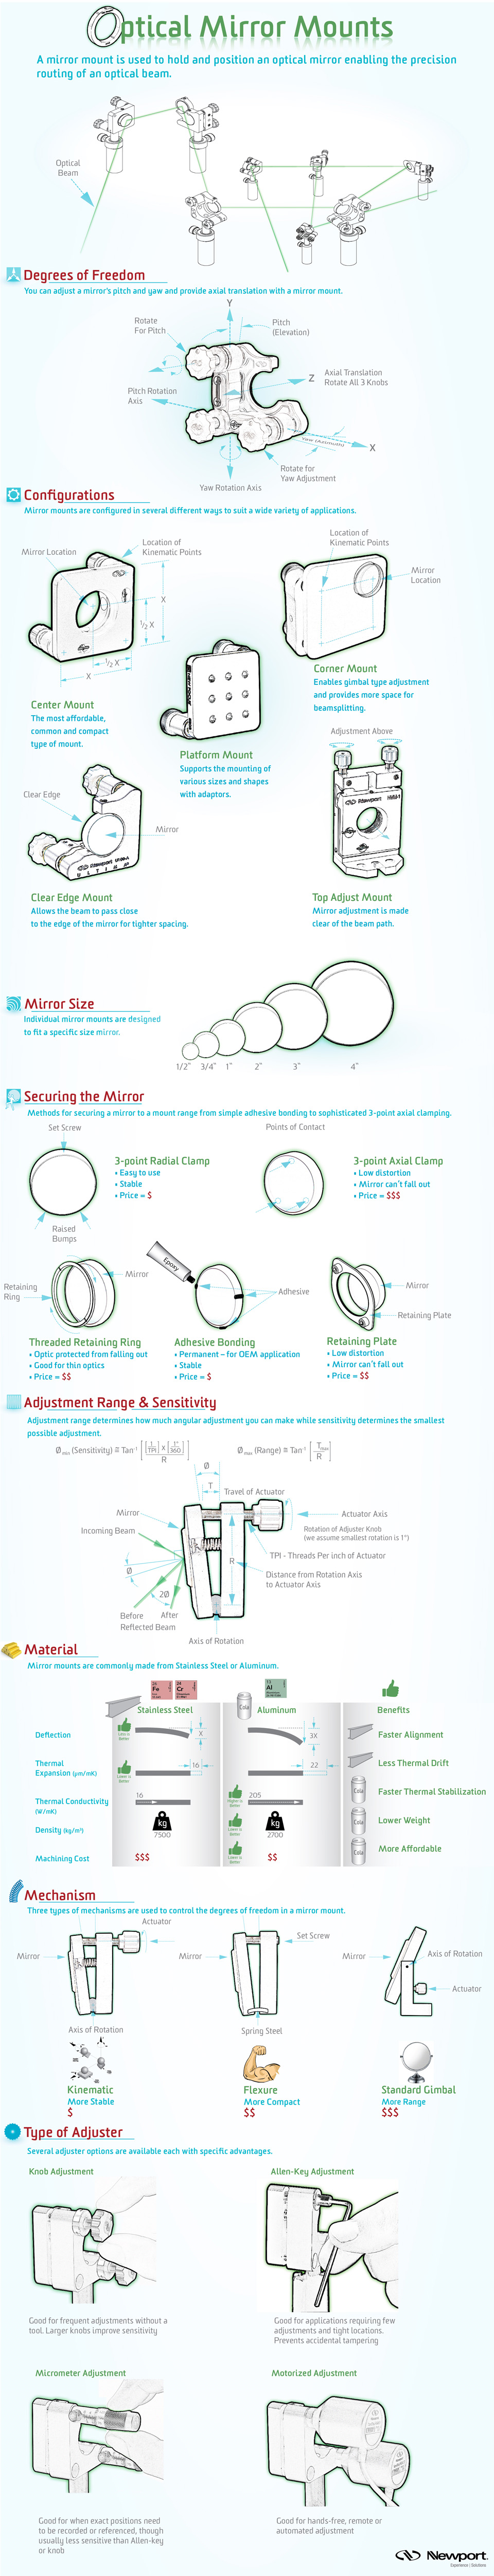 Optical Mirror Mount Infographic